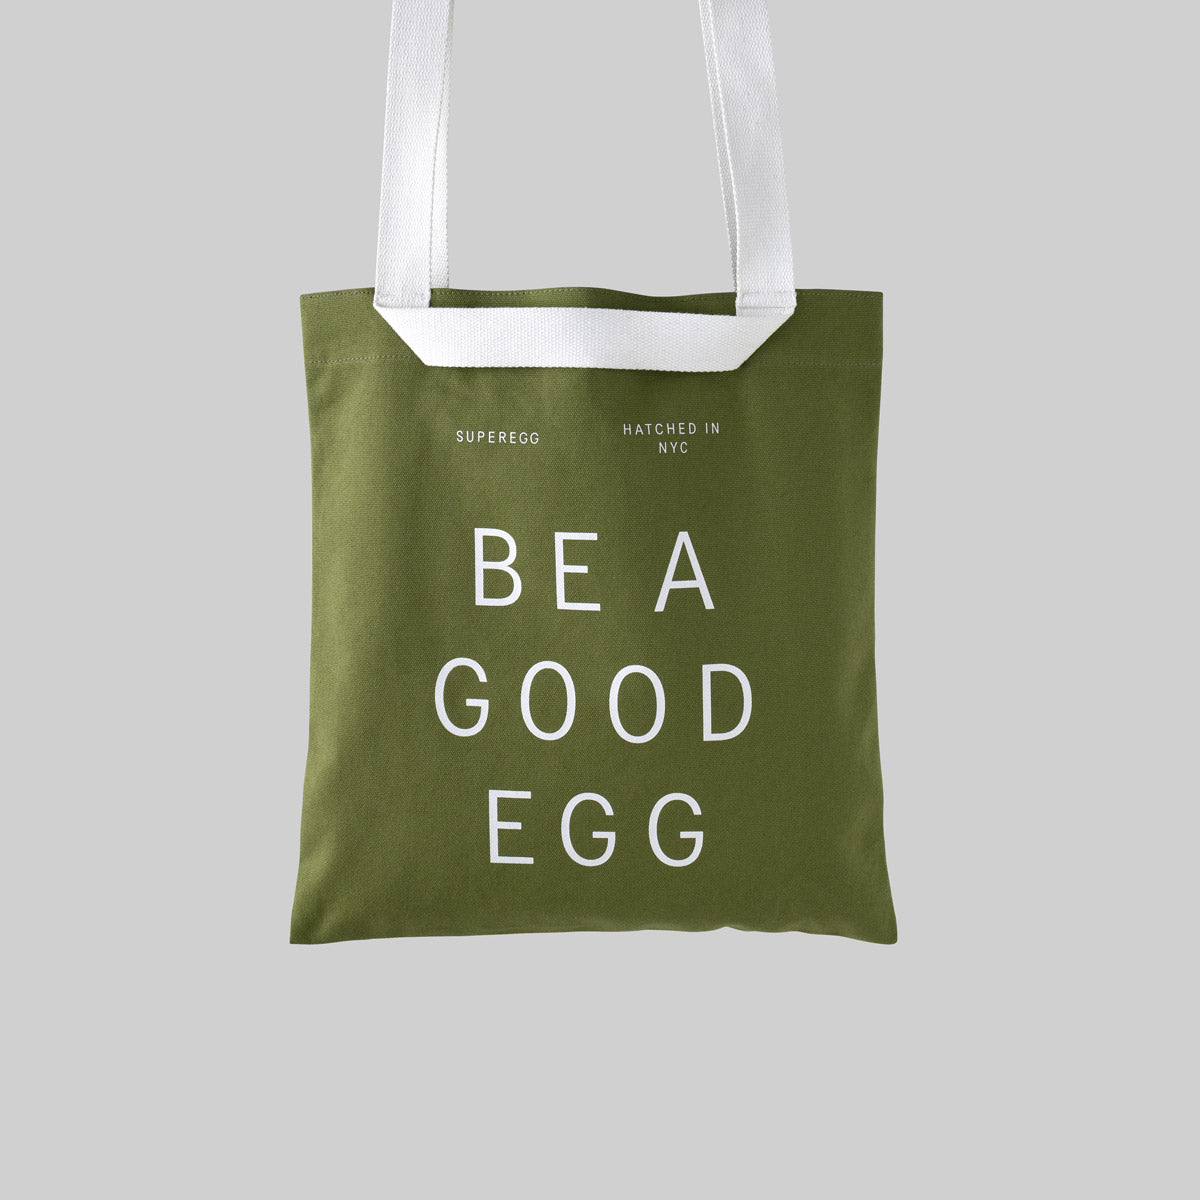 Made-to-Order Mod Egg Handbag - Add Libb Designs